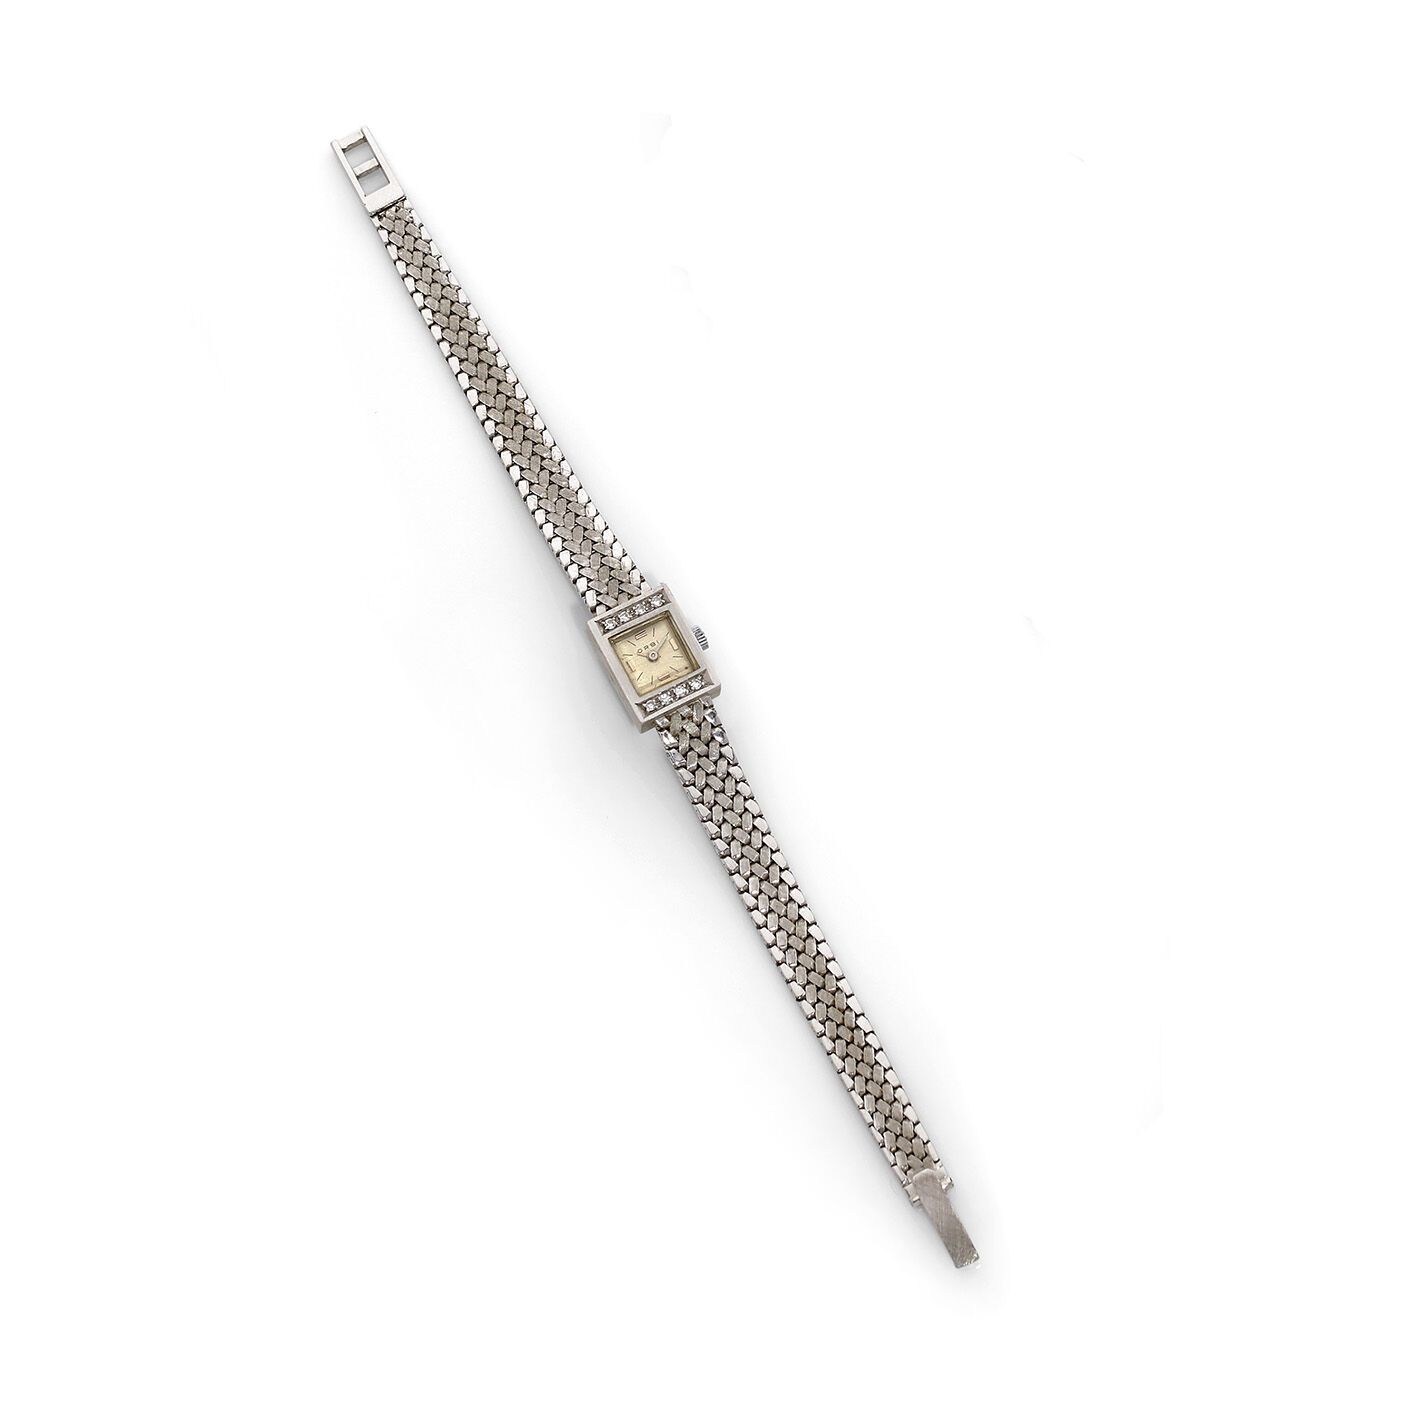 ORBI ORBI
18K（15万分之一）白金女士腕表，约1950年，长方形表壳，银色表盘上有贴花刻度和 "钢丝 "指针。镶有8颗明亮式切割钻石的表圈。背面为1&hellip;